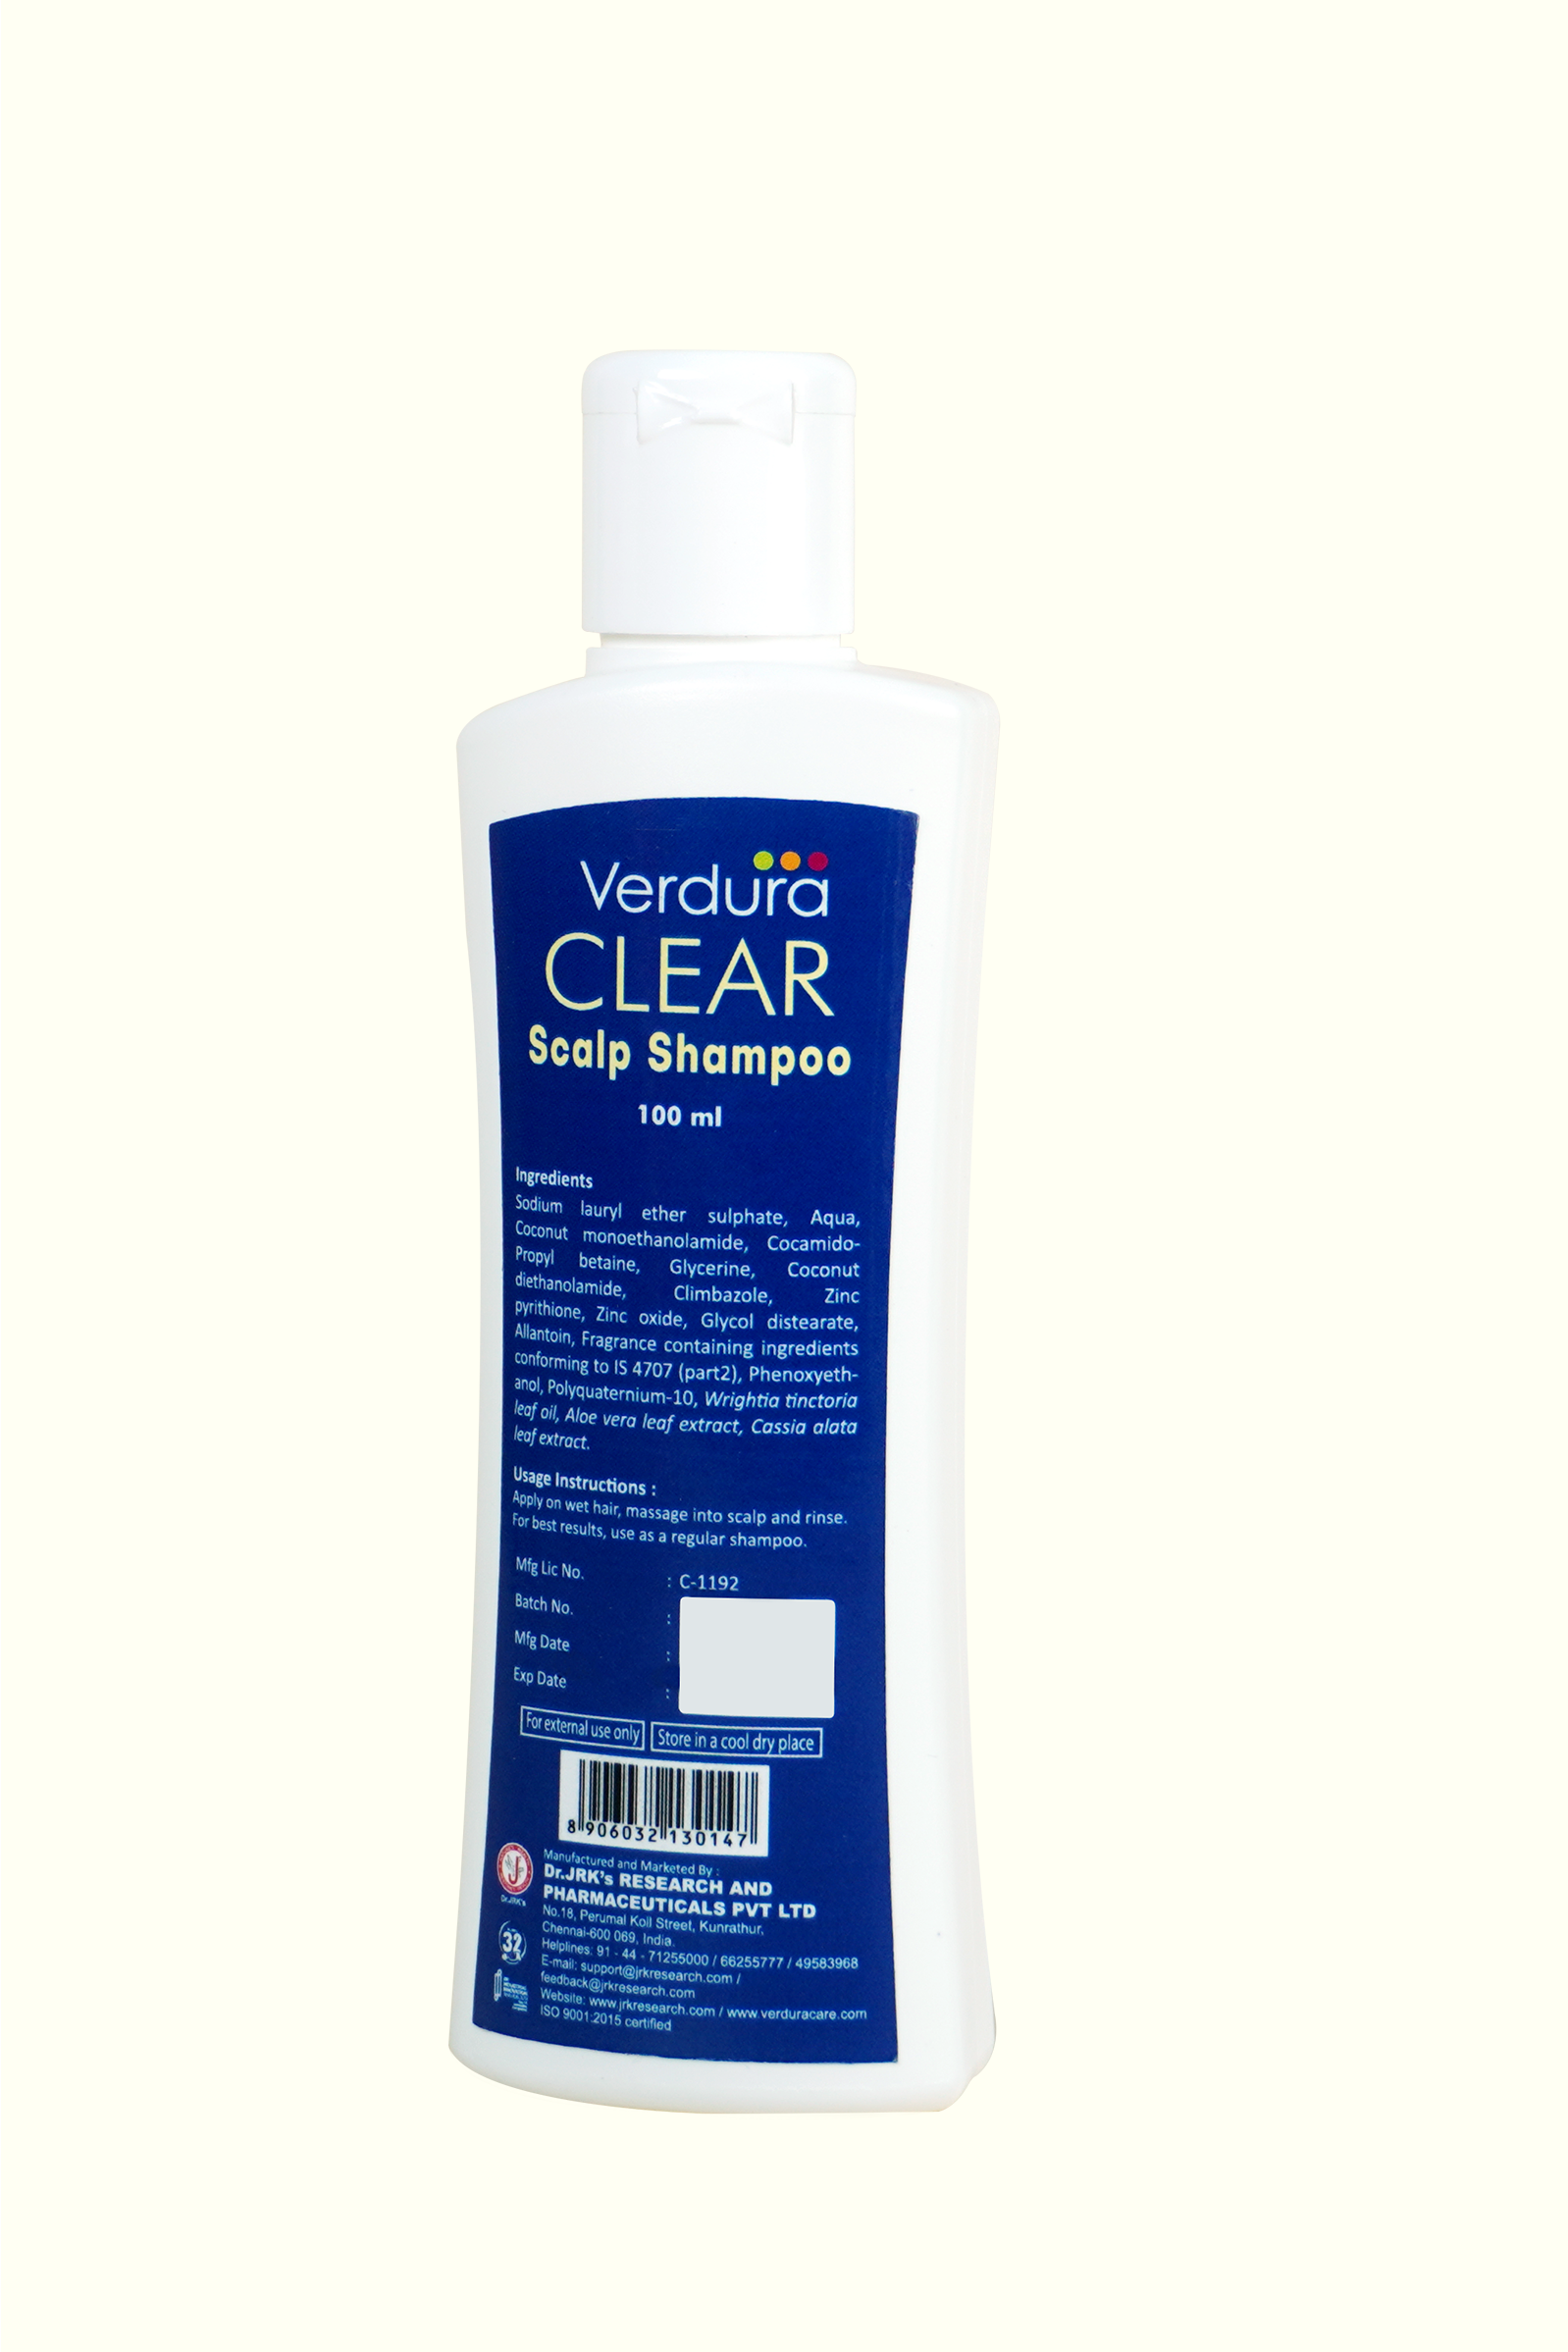 Verdura clear scalp shampoo